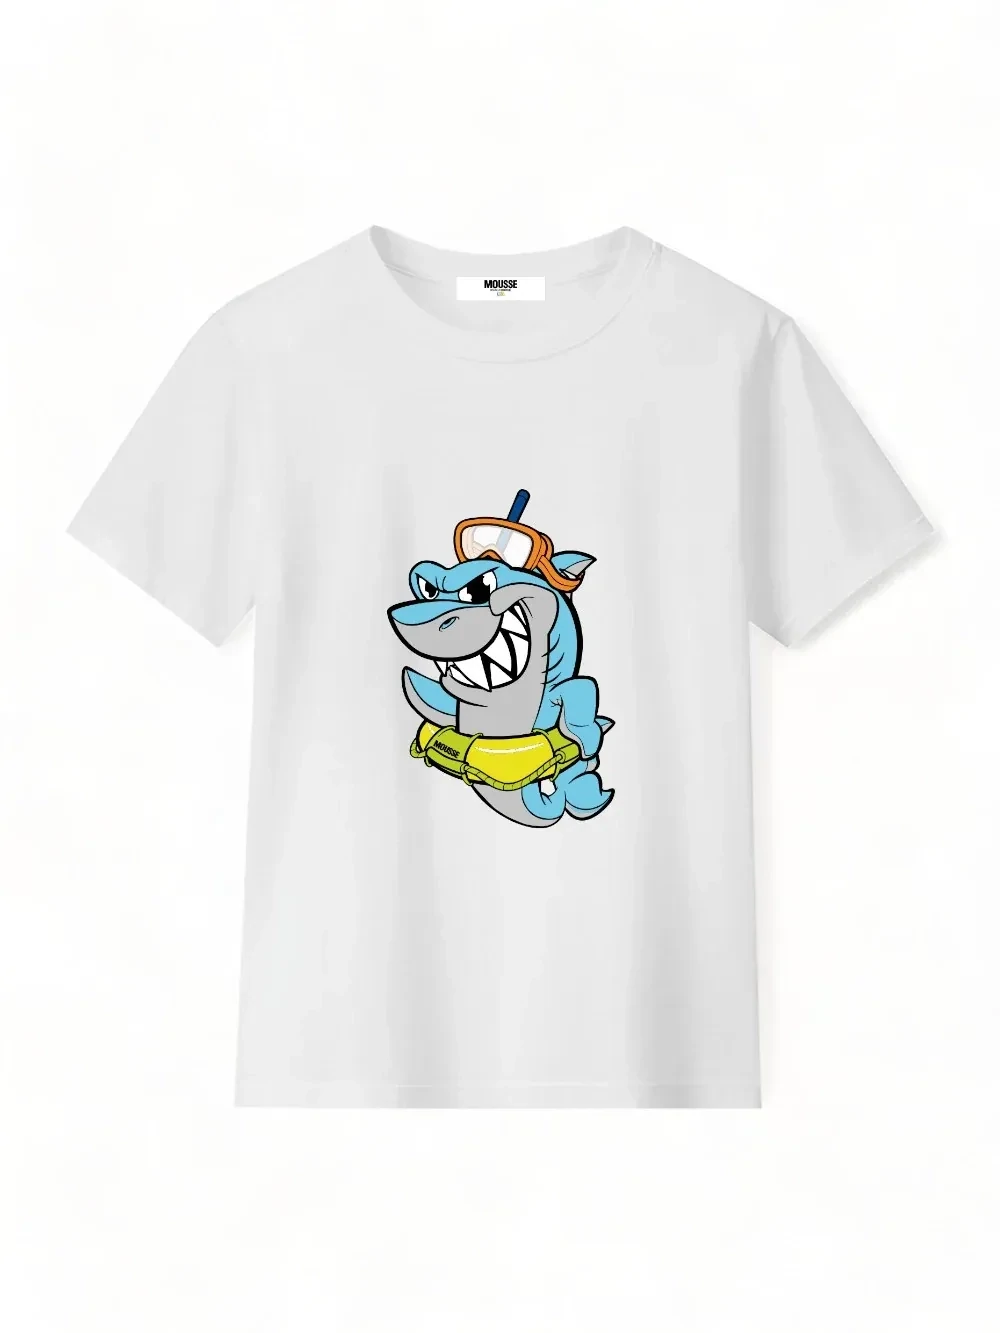 Mousse - T-shirt shark, Size: 2 anni